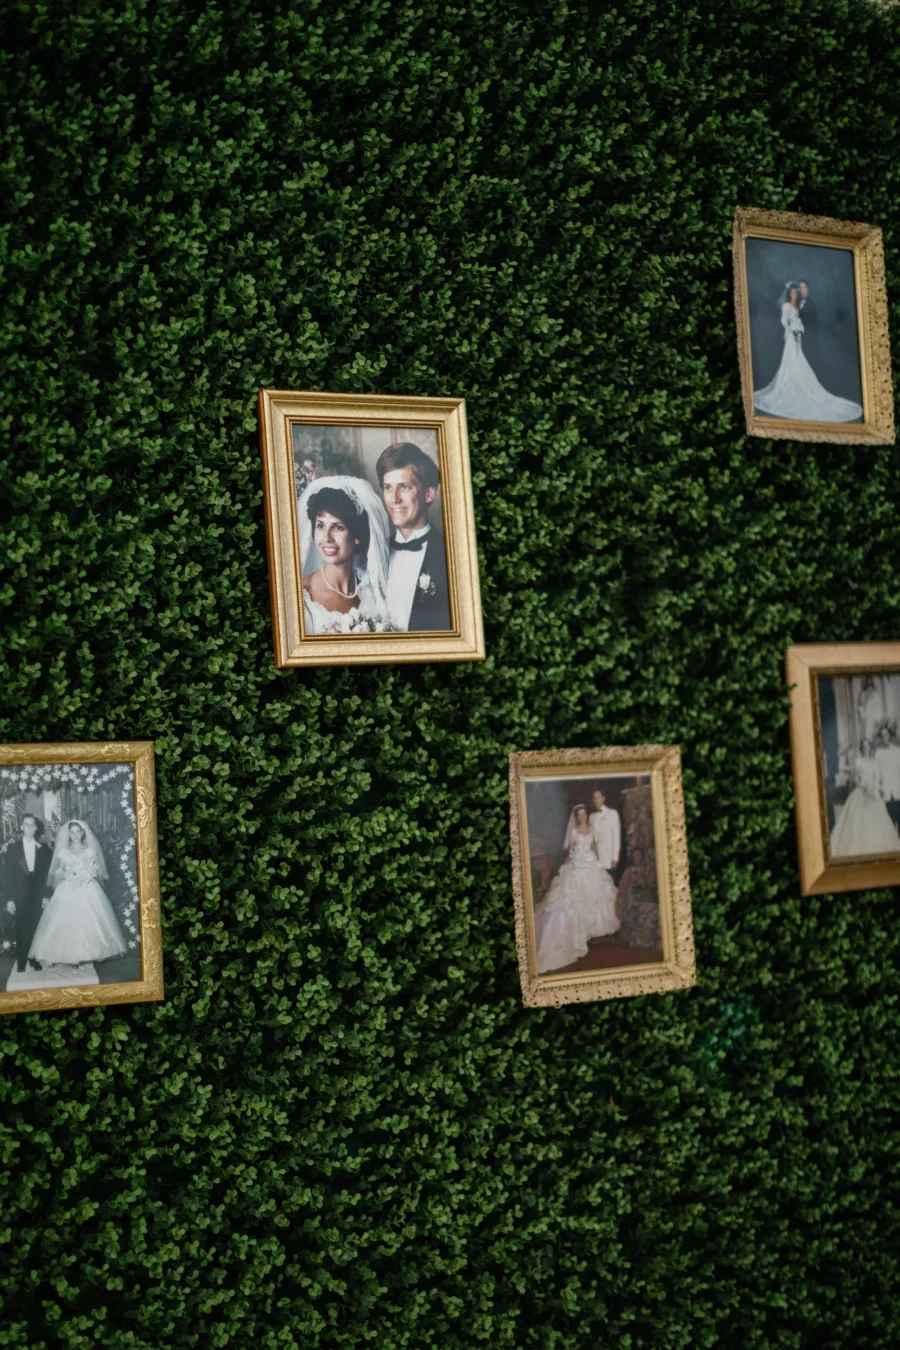 Generational Wedding Photos on Grass Wall for Old Florida Wedding Reception Decor Ideas